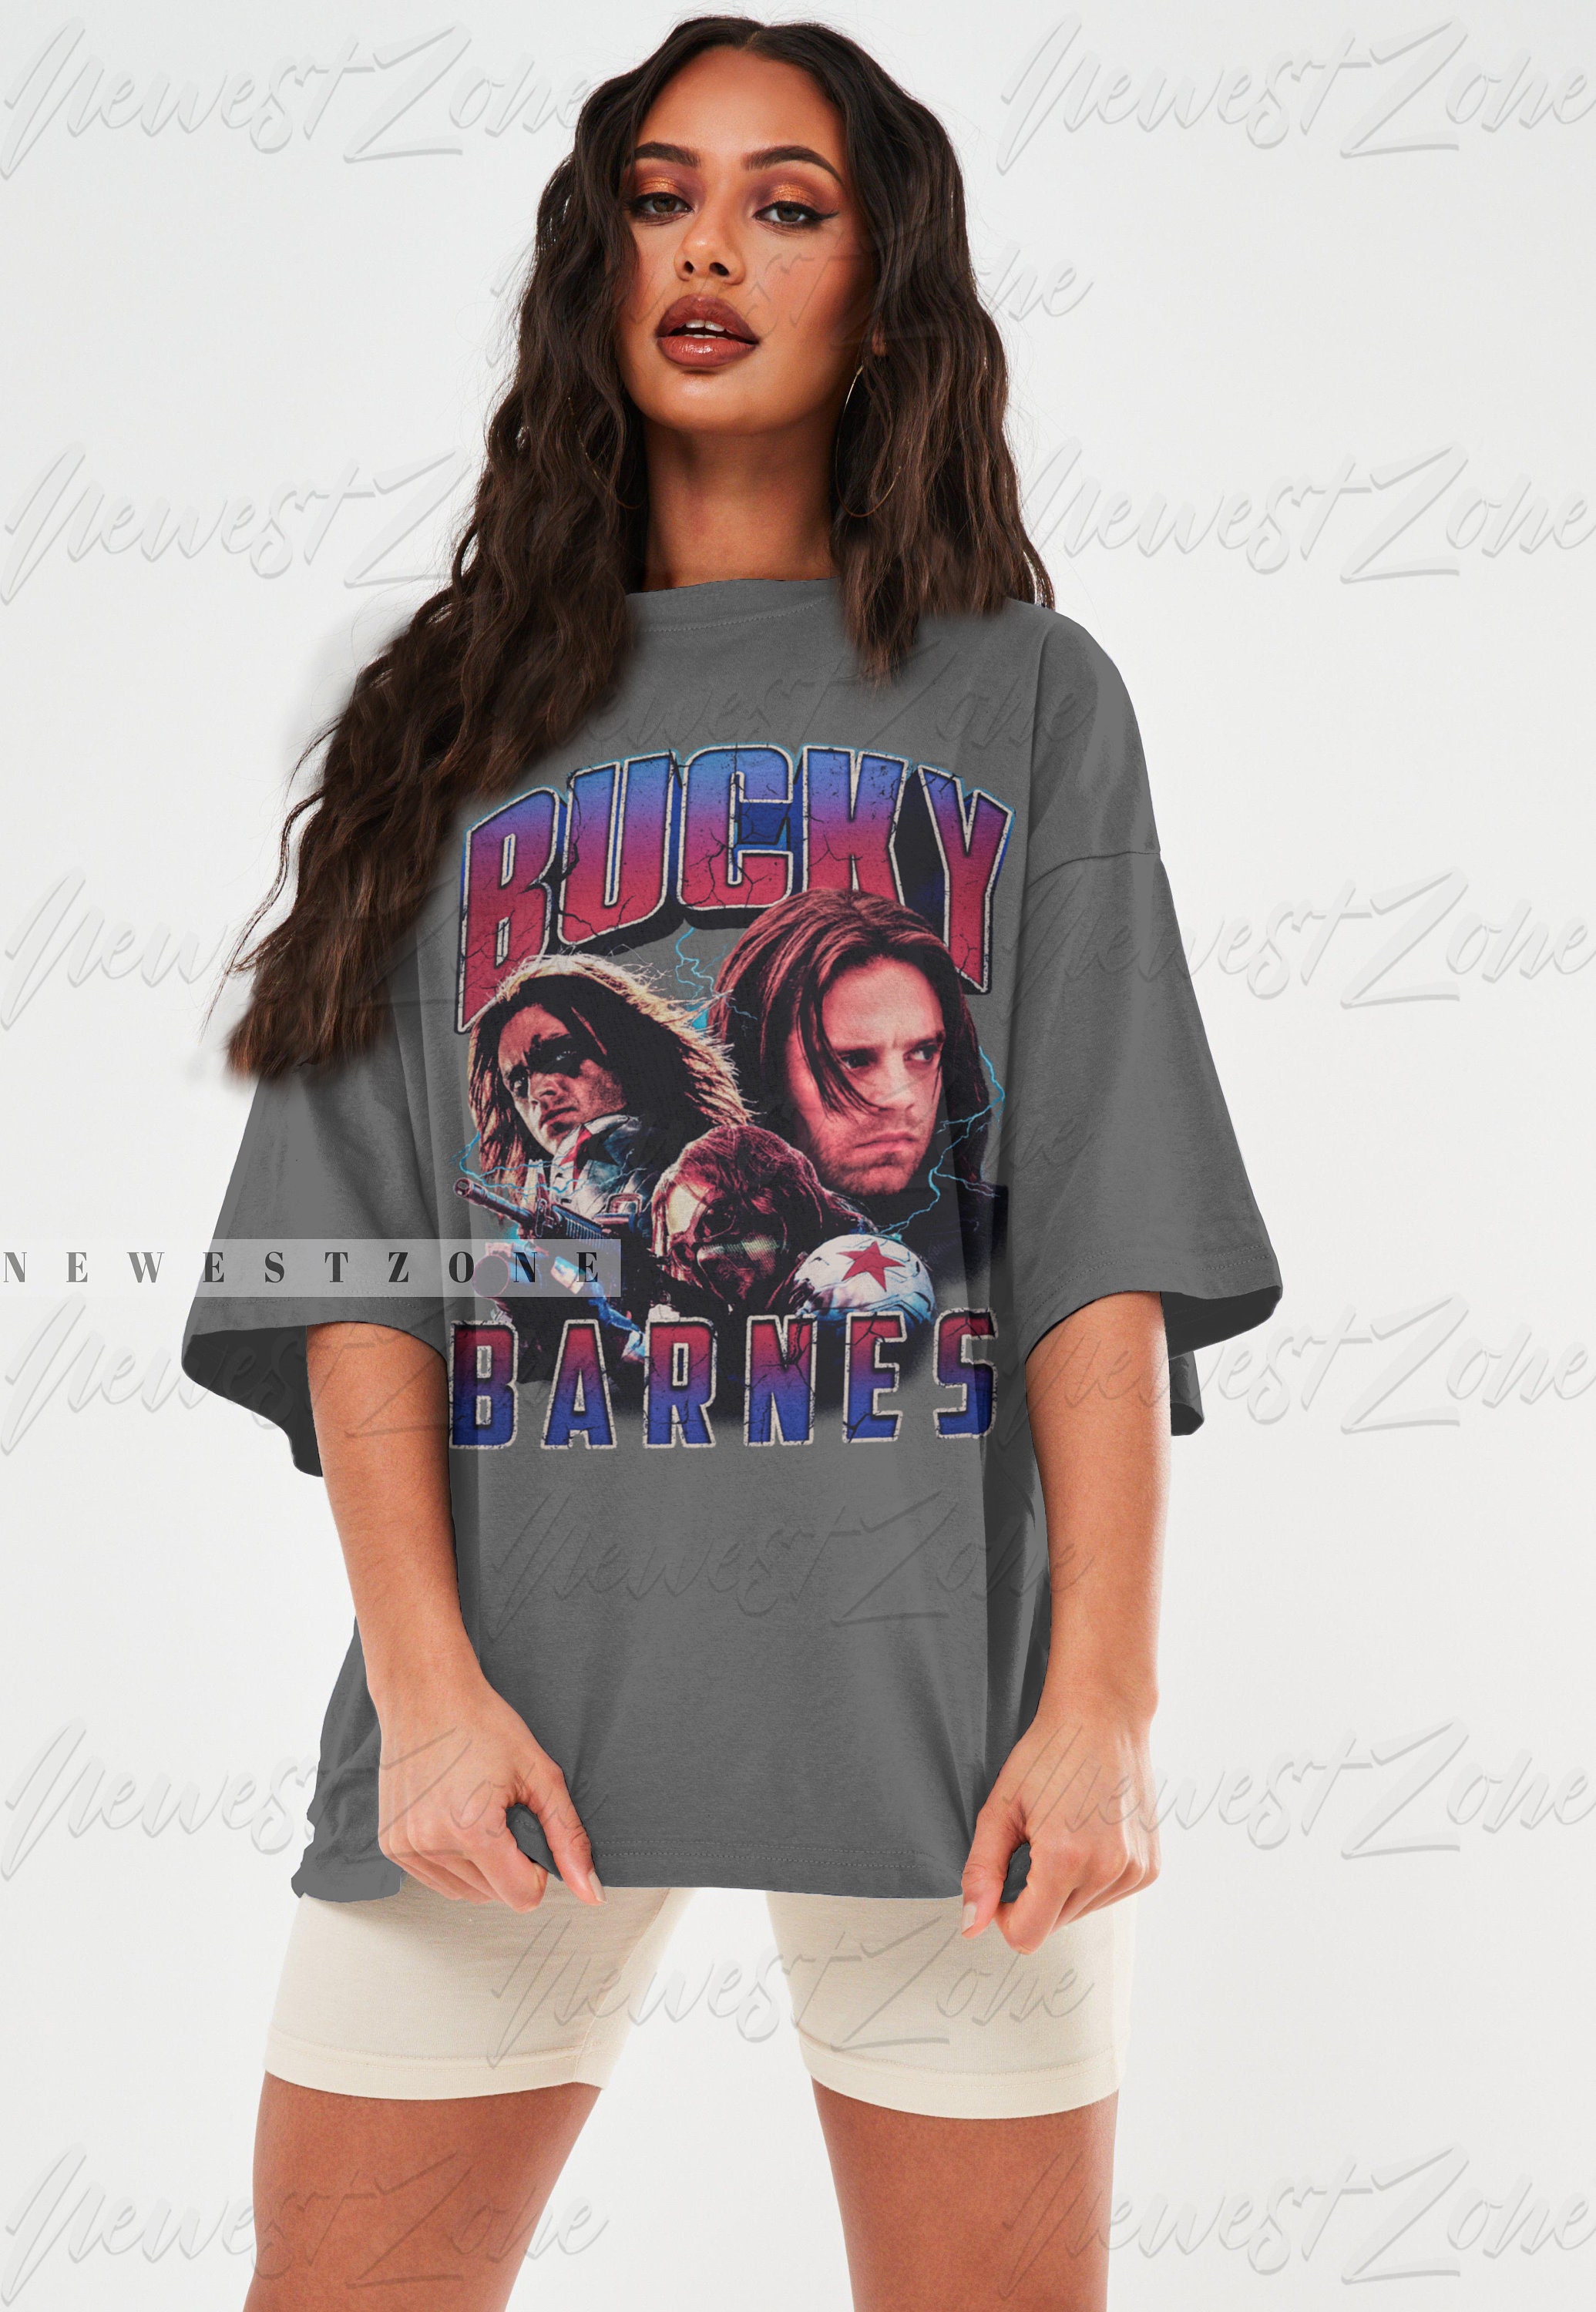 Discover Bucky Barnes Shirt Actor Movie Drama Television Series United States Retro Vintage T-Shirt